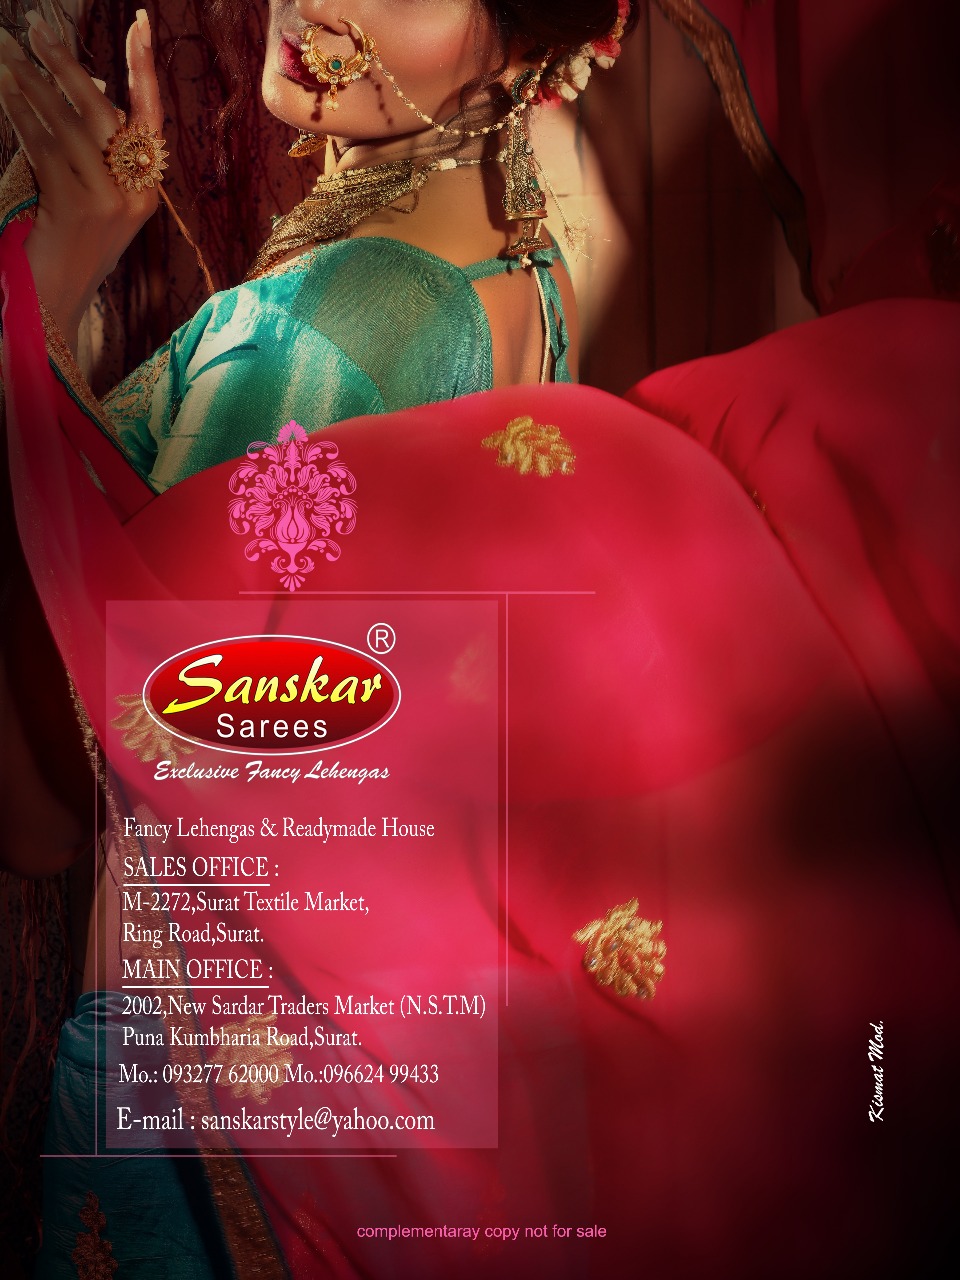 Sanskar sarees presents Monalisa festive traditional concept lehenga